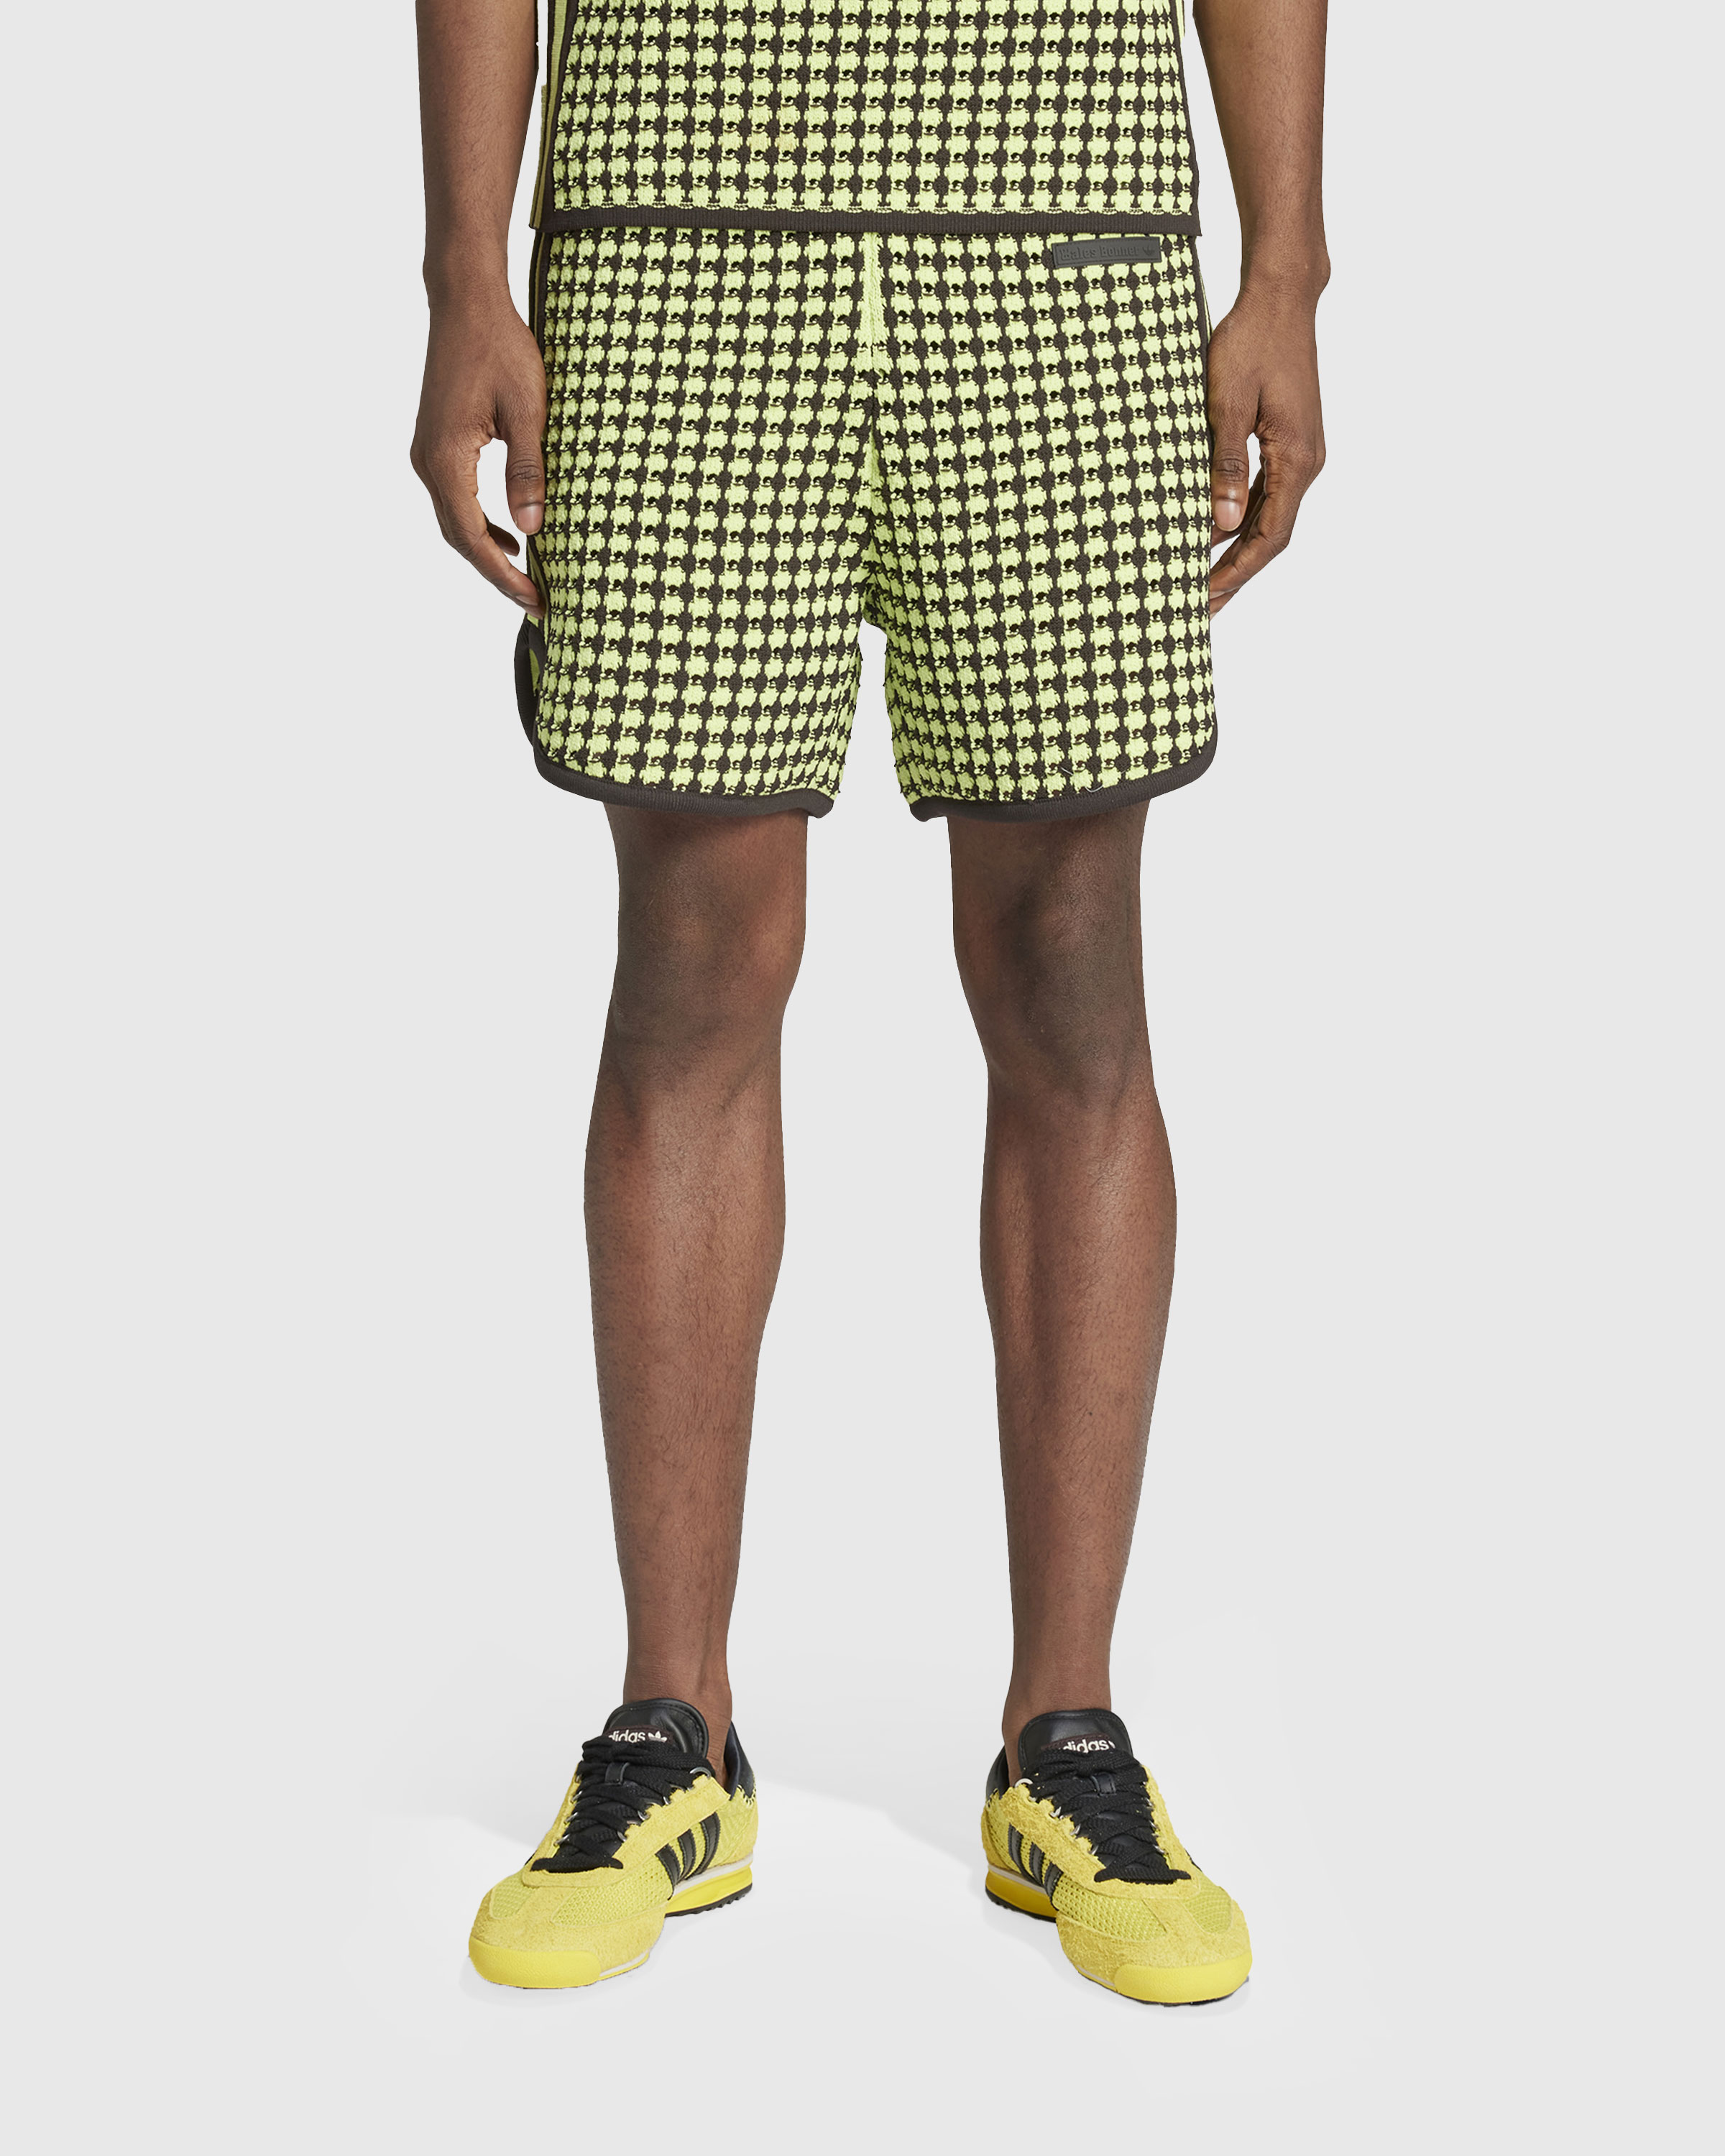 Adidas x Wales Bonner – Knit Shorts Semi Frozen Yellow/Night Brown - Short Cuts - Yellow - Image 2